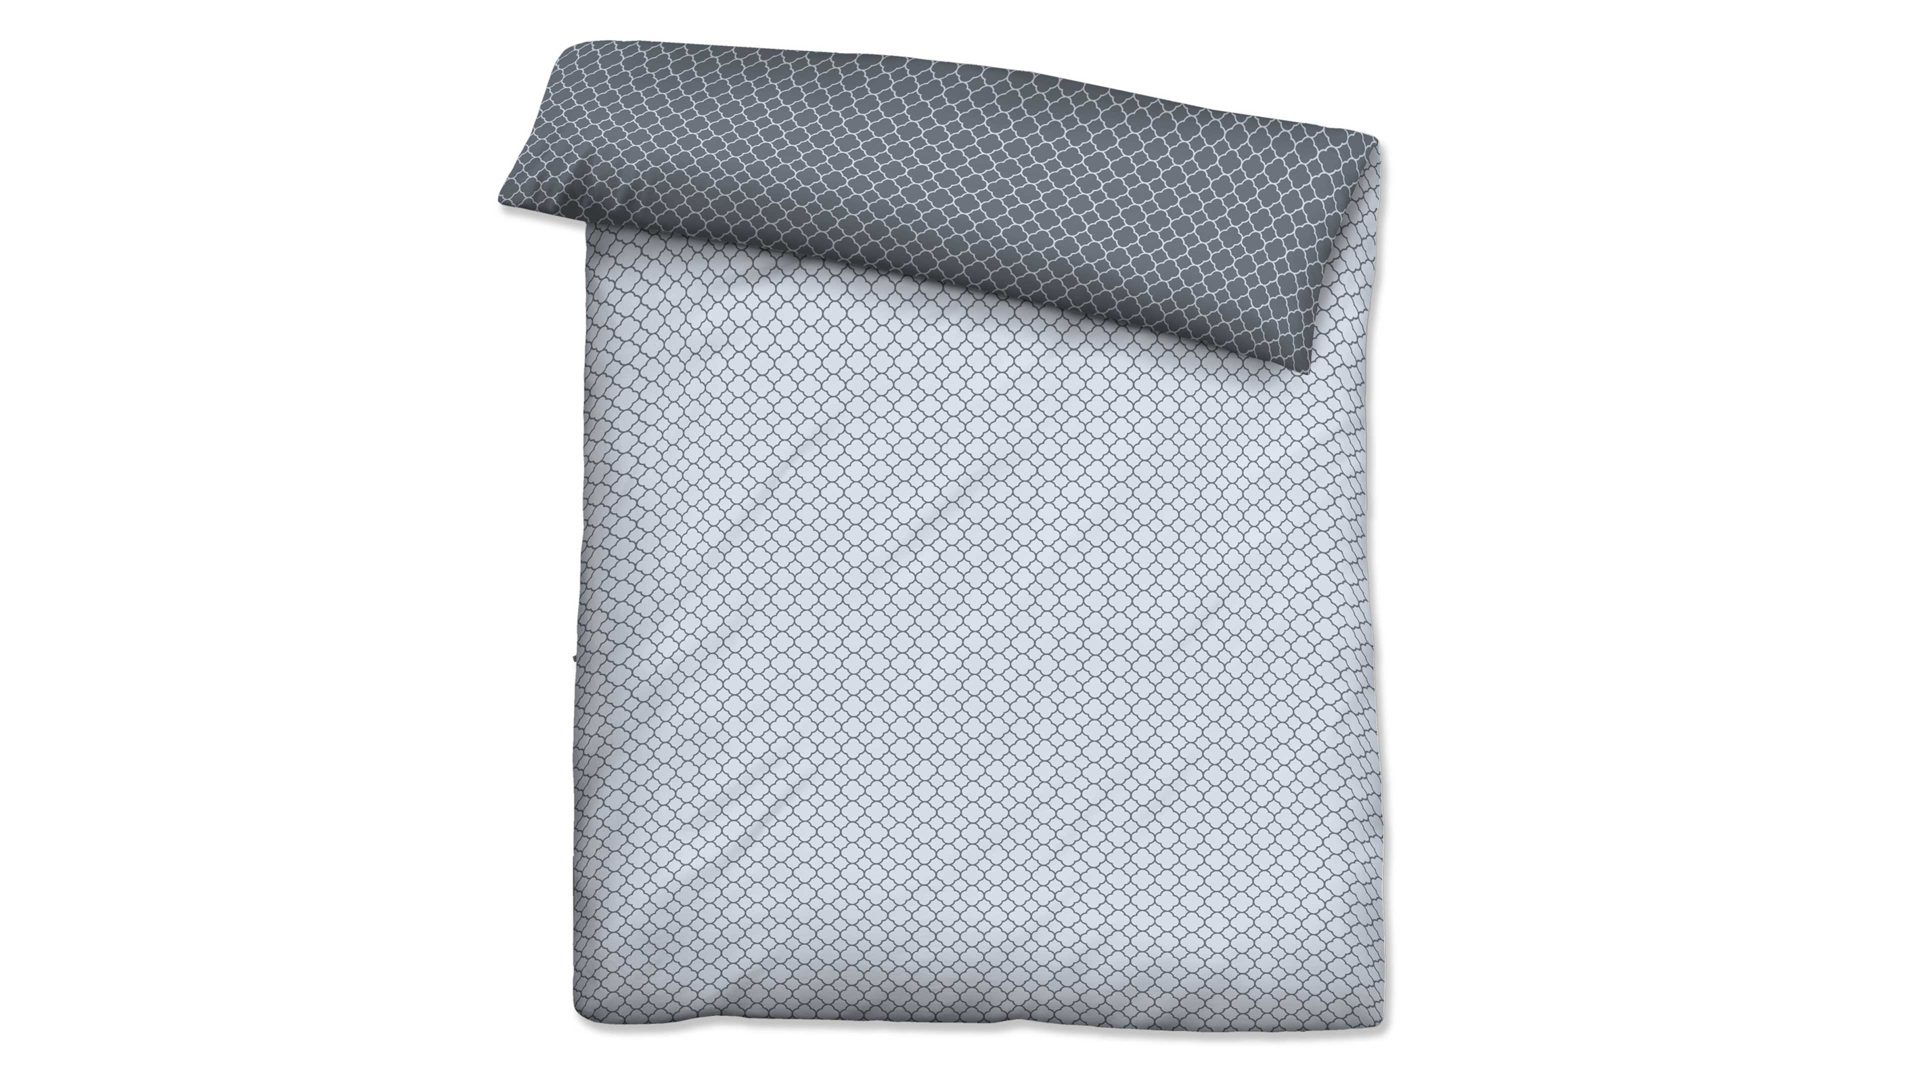 Bettbezug Biberna aus Stoff in Blau biberna Mako-Satin Bettdeckenbezug Grafik Mix & Match rauch- & graublaues Grafikmuster – ca. 200 x 200 cm